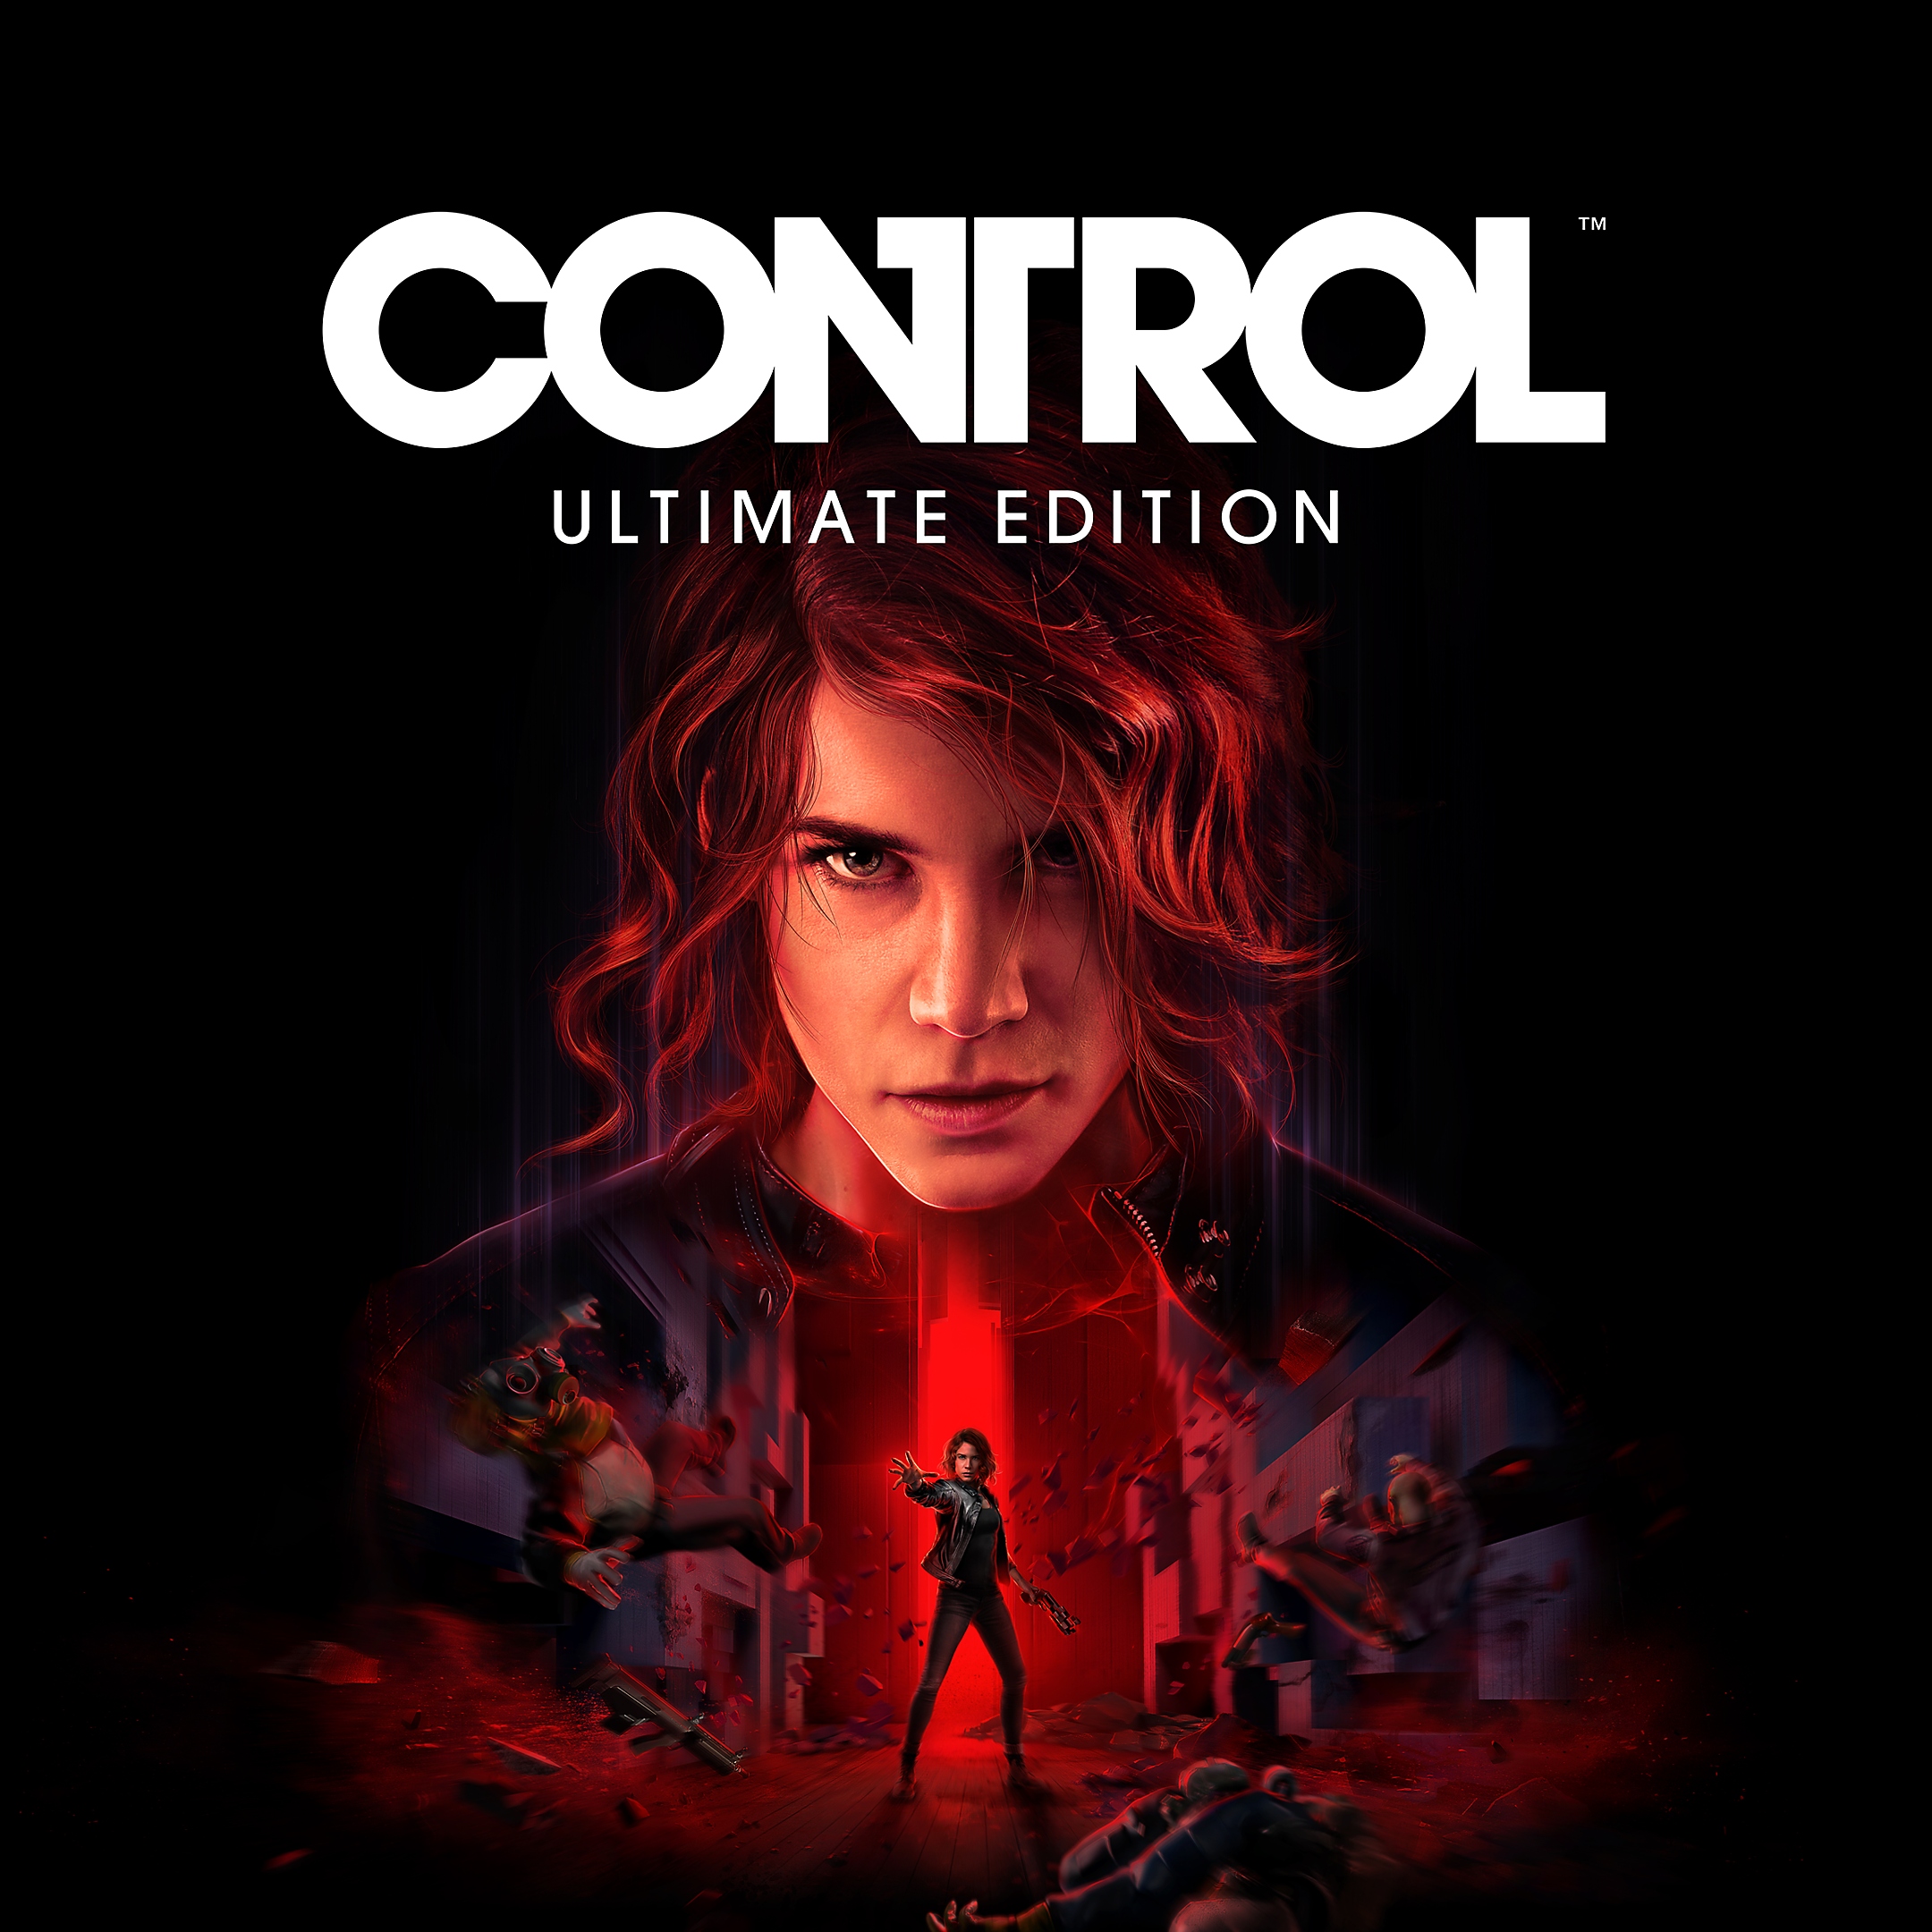 Control: Ultimate Edition – key art